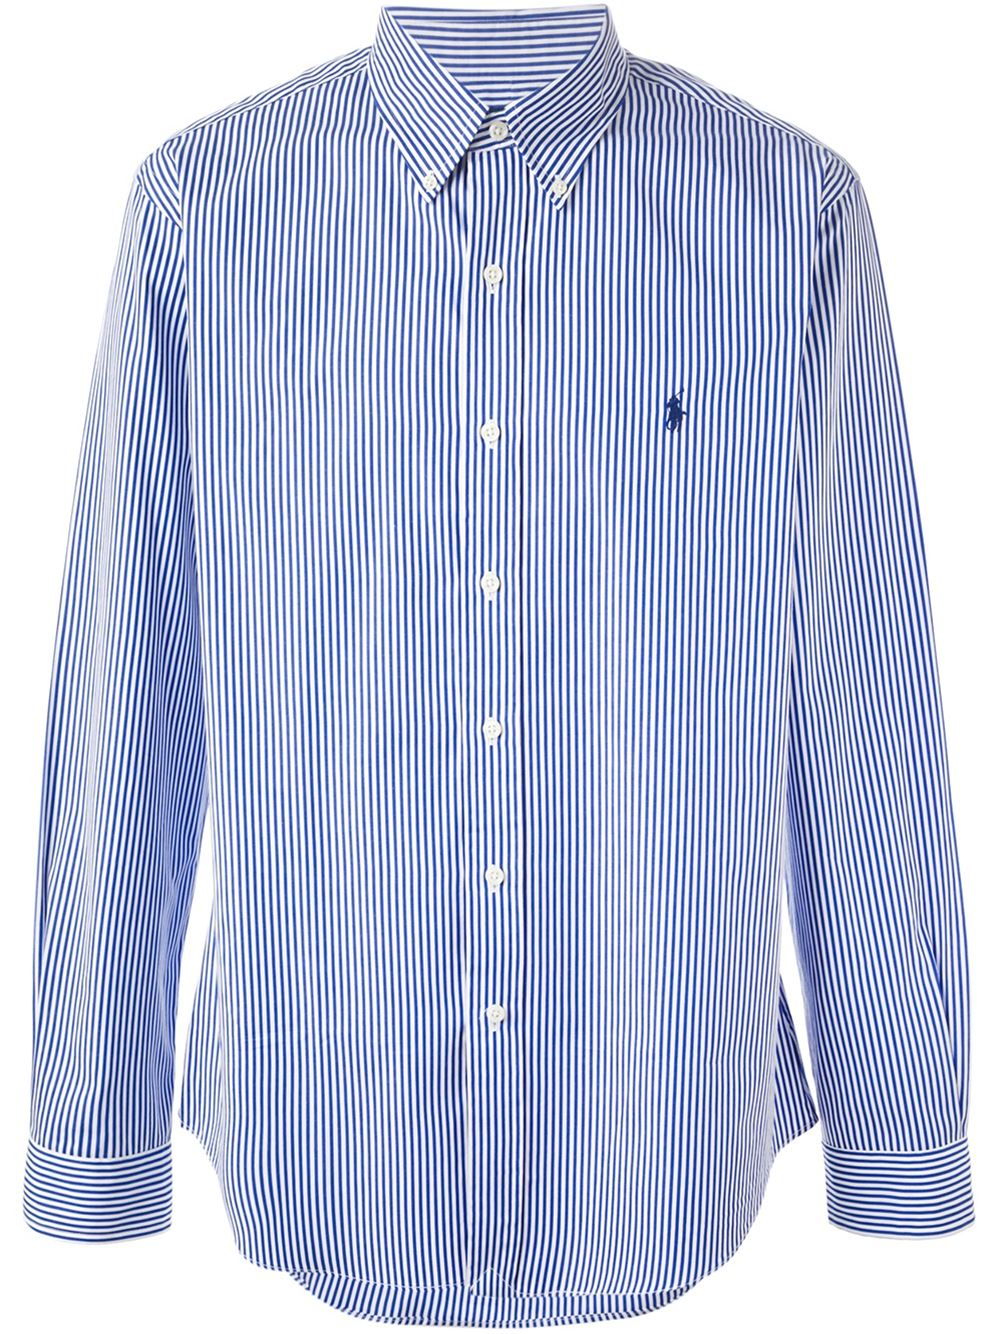 Lyst - Polo Ralph Lauren Striped Button Down Shirt in Blue for Men